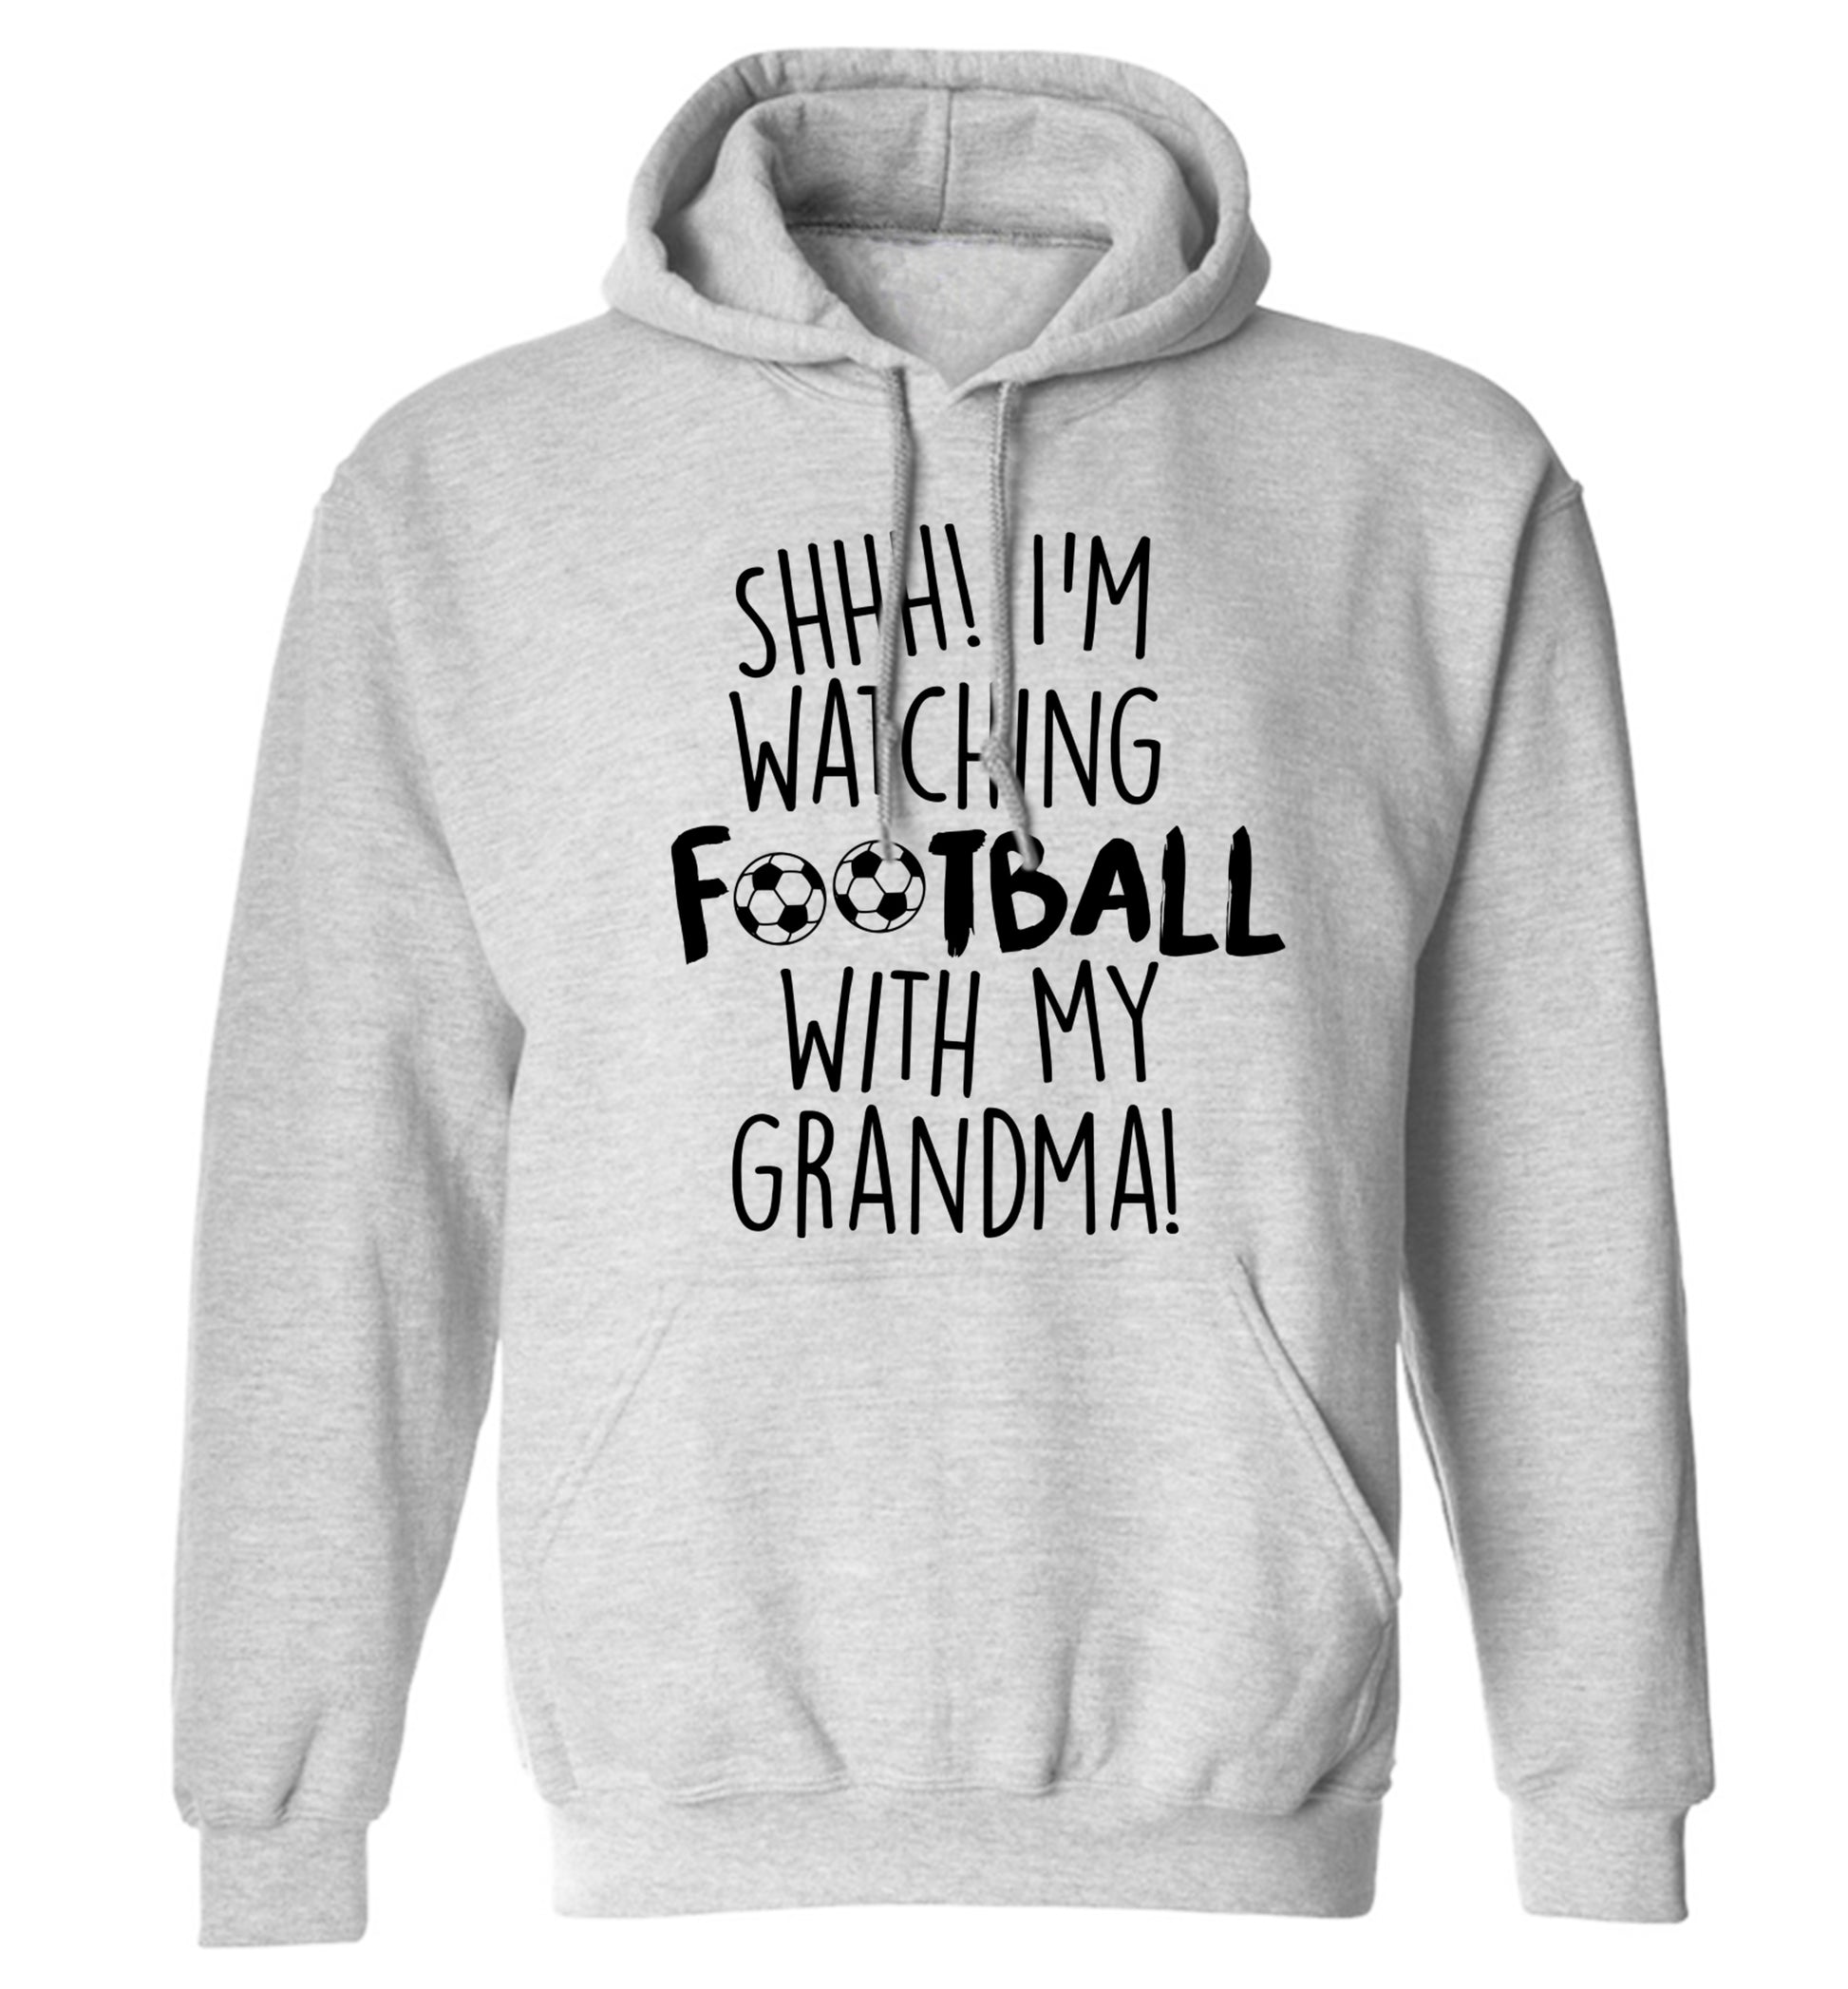 Shhh I'm watching football with my grandma adults unisexgrey hoodie 2XL